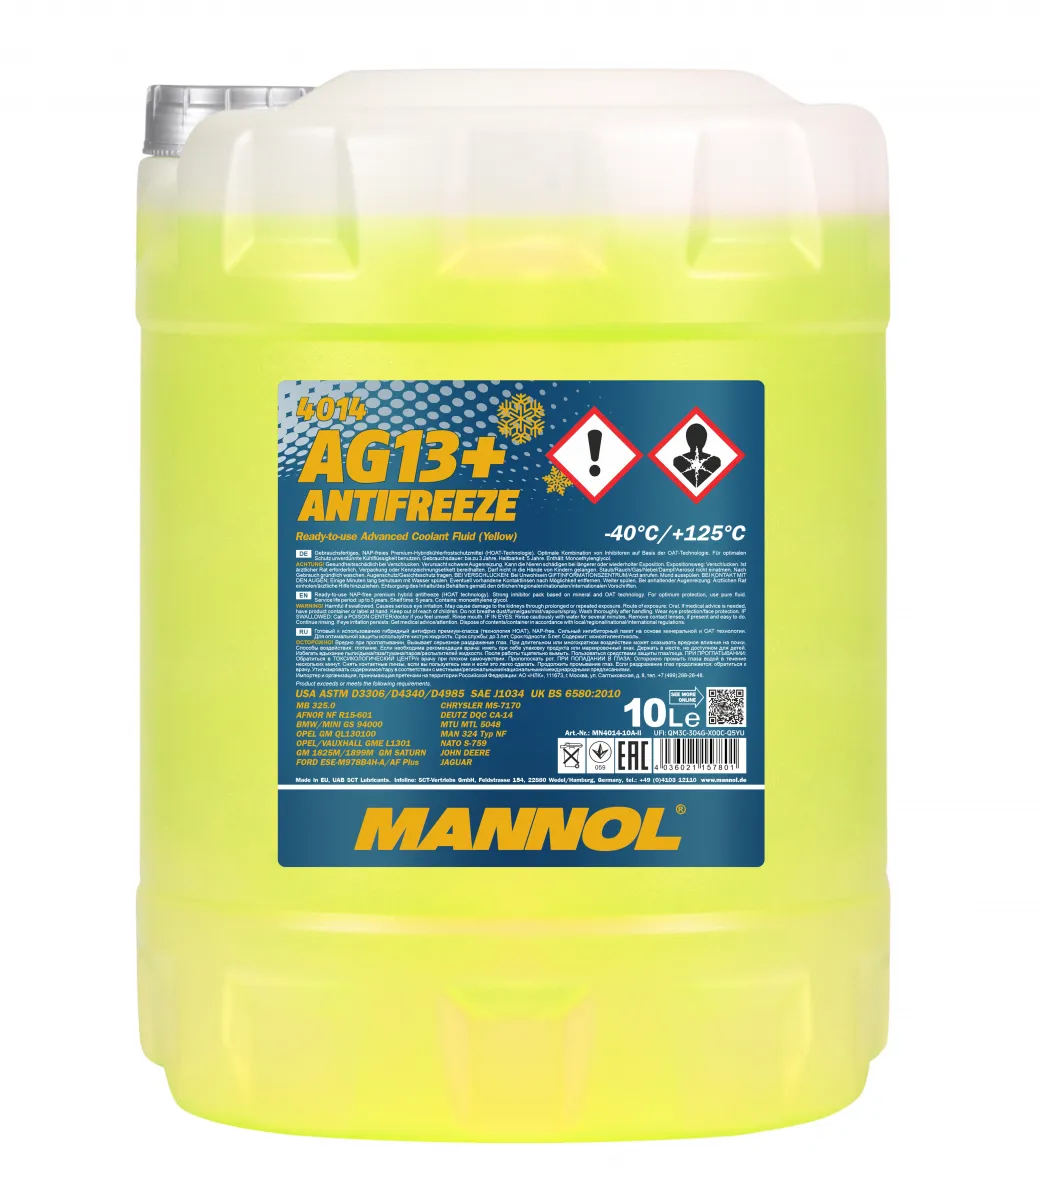 mannol antifreeze ag13+ (-40 °C)#2